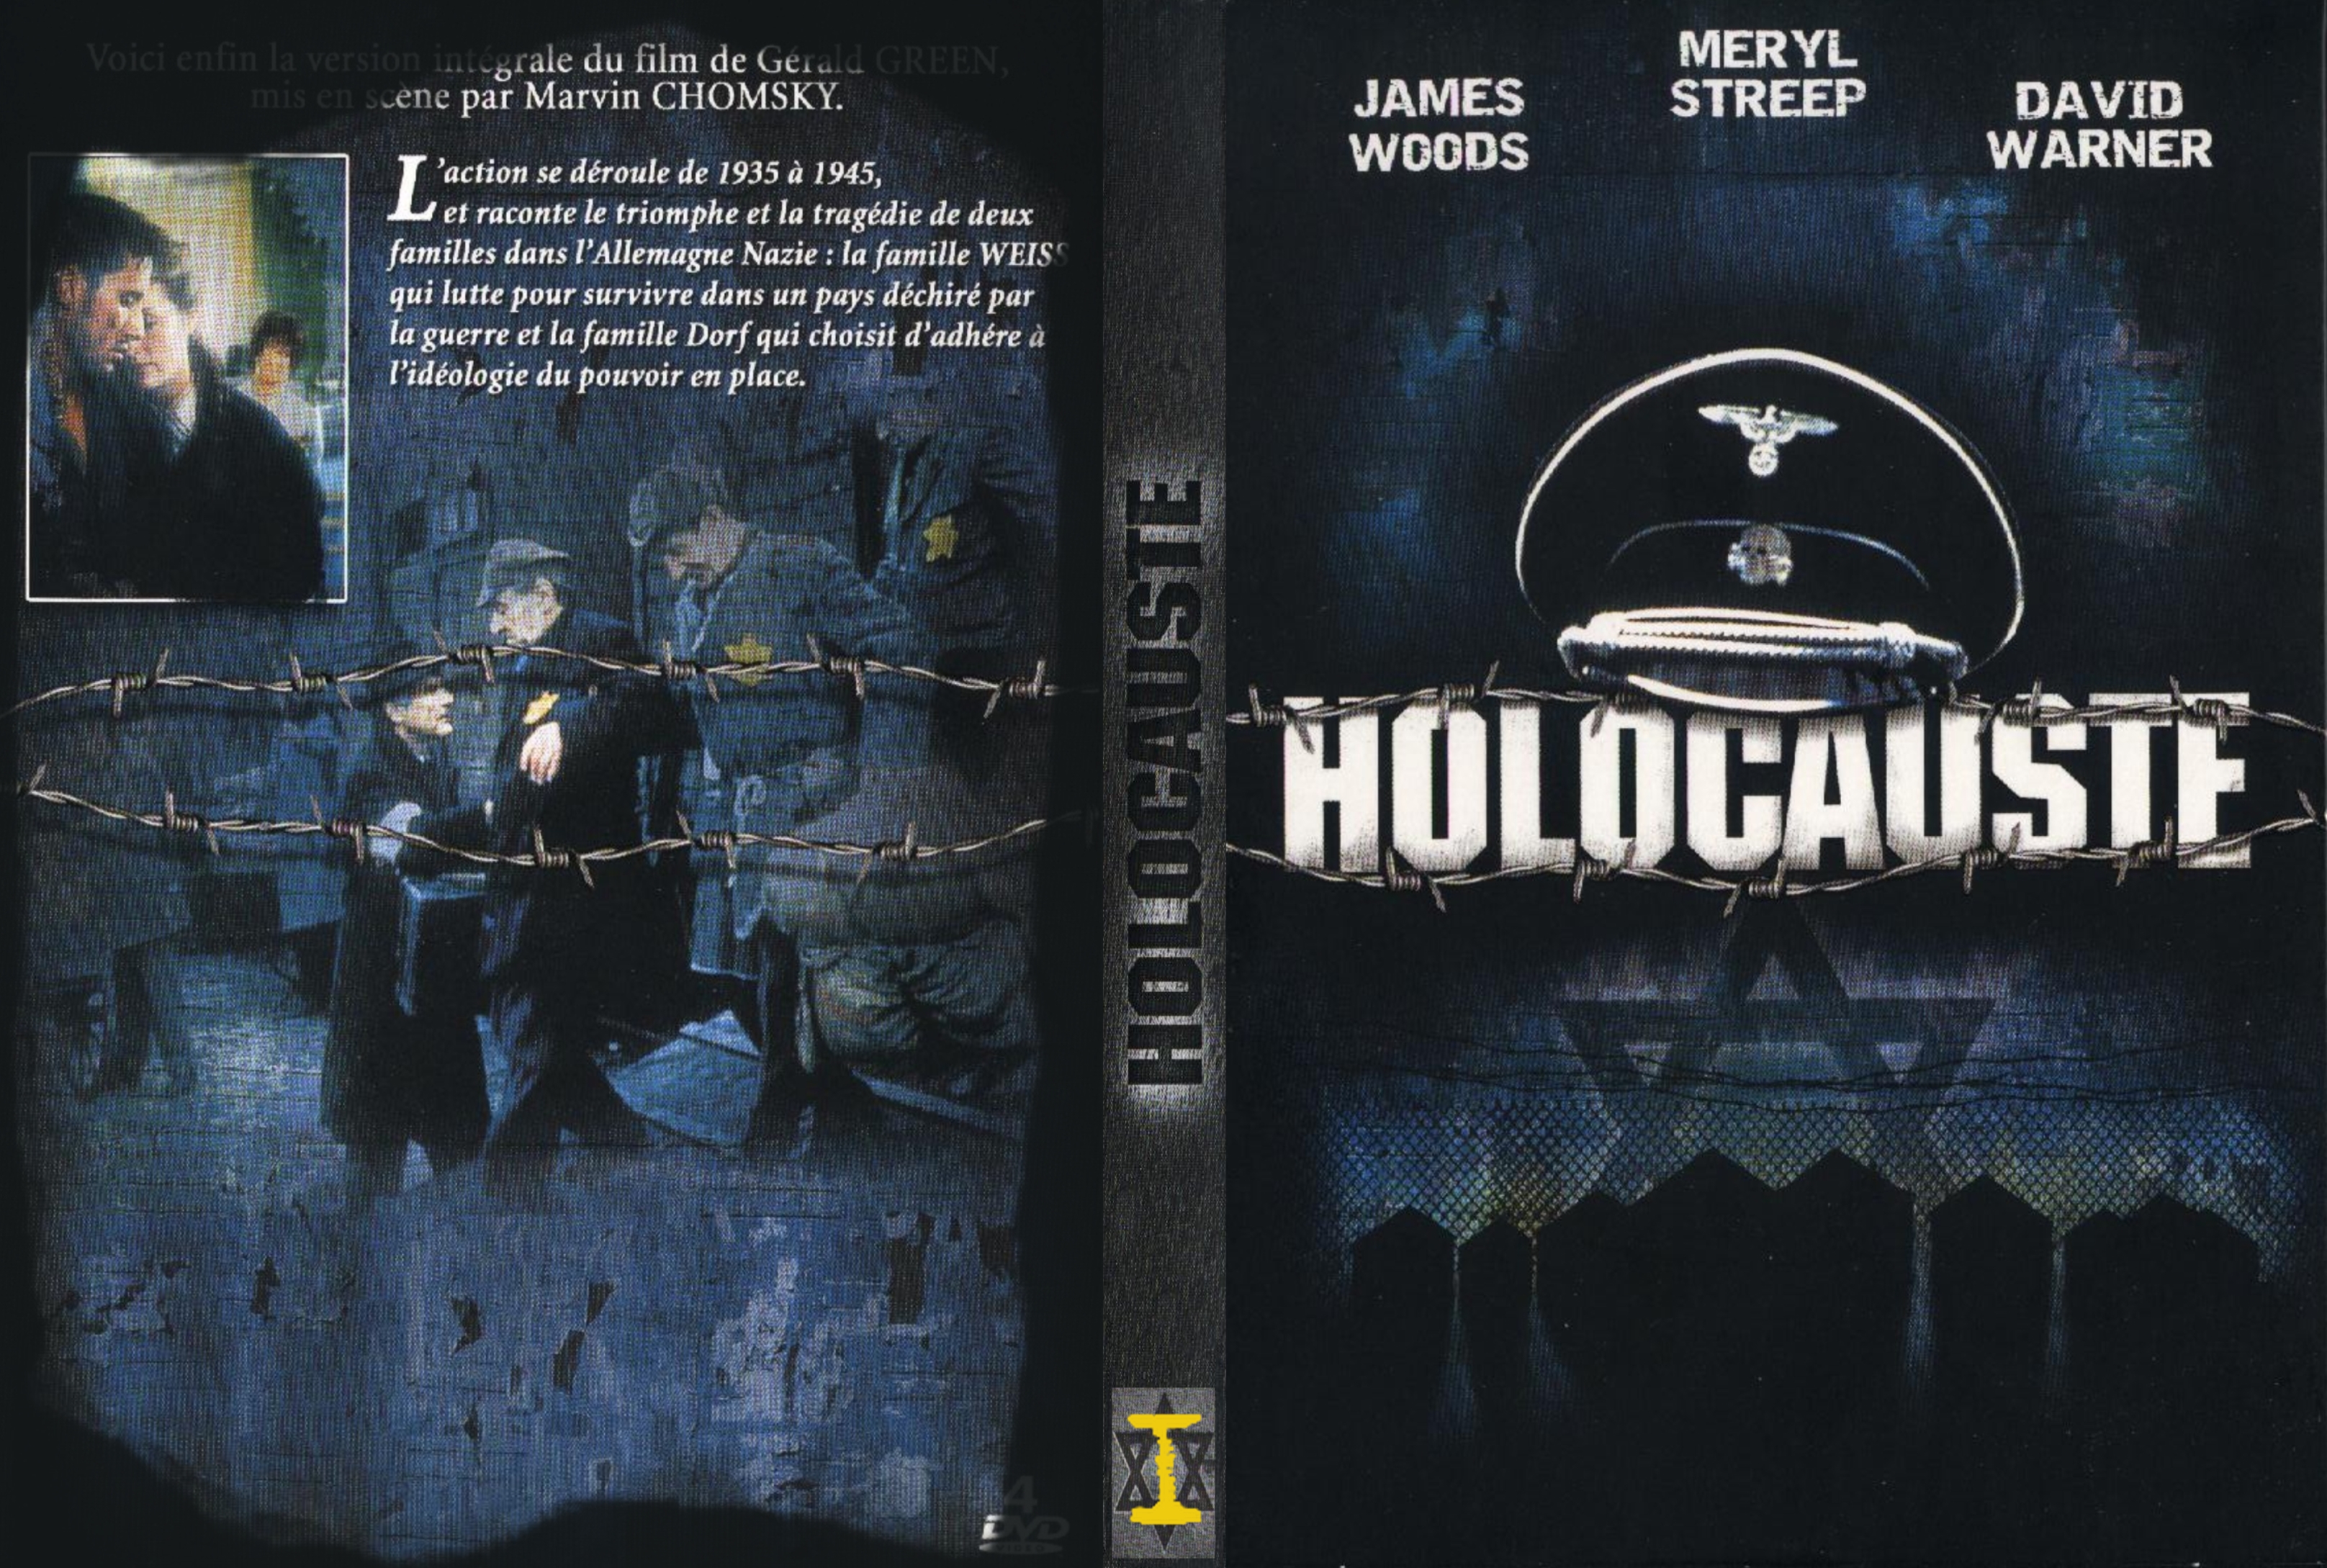 Jaquette DVD Holocauste DVD 1